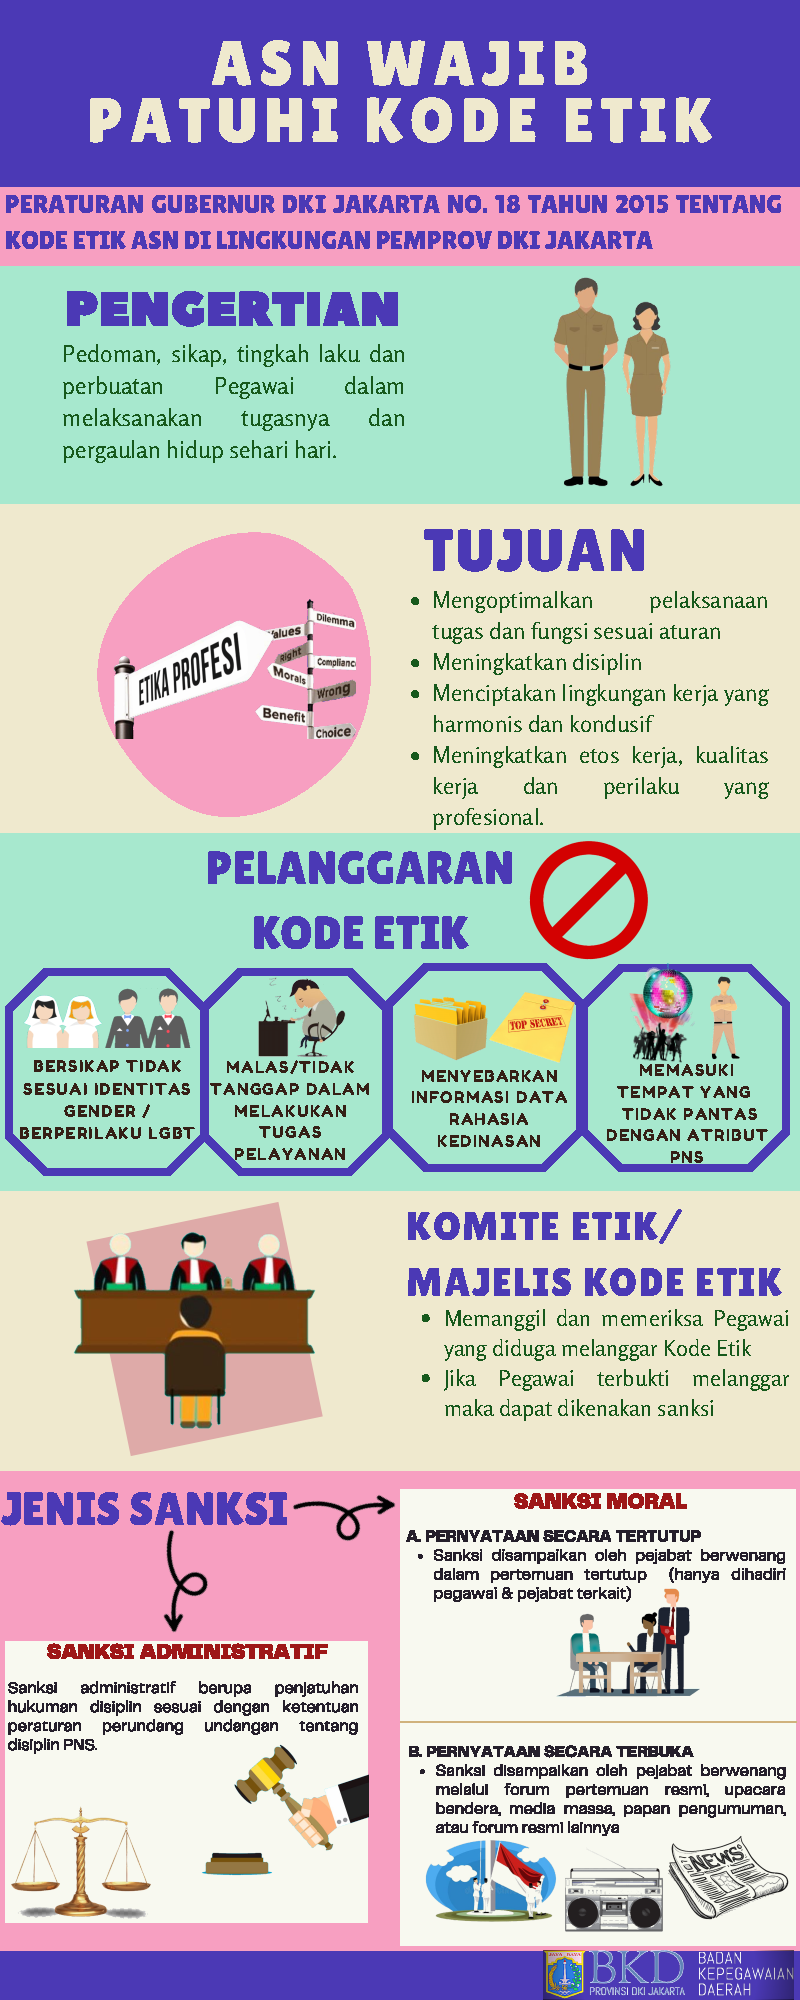 [Infografis] - Kode Etik ASN Di Lingkungan Pemprov DKI Jakarta